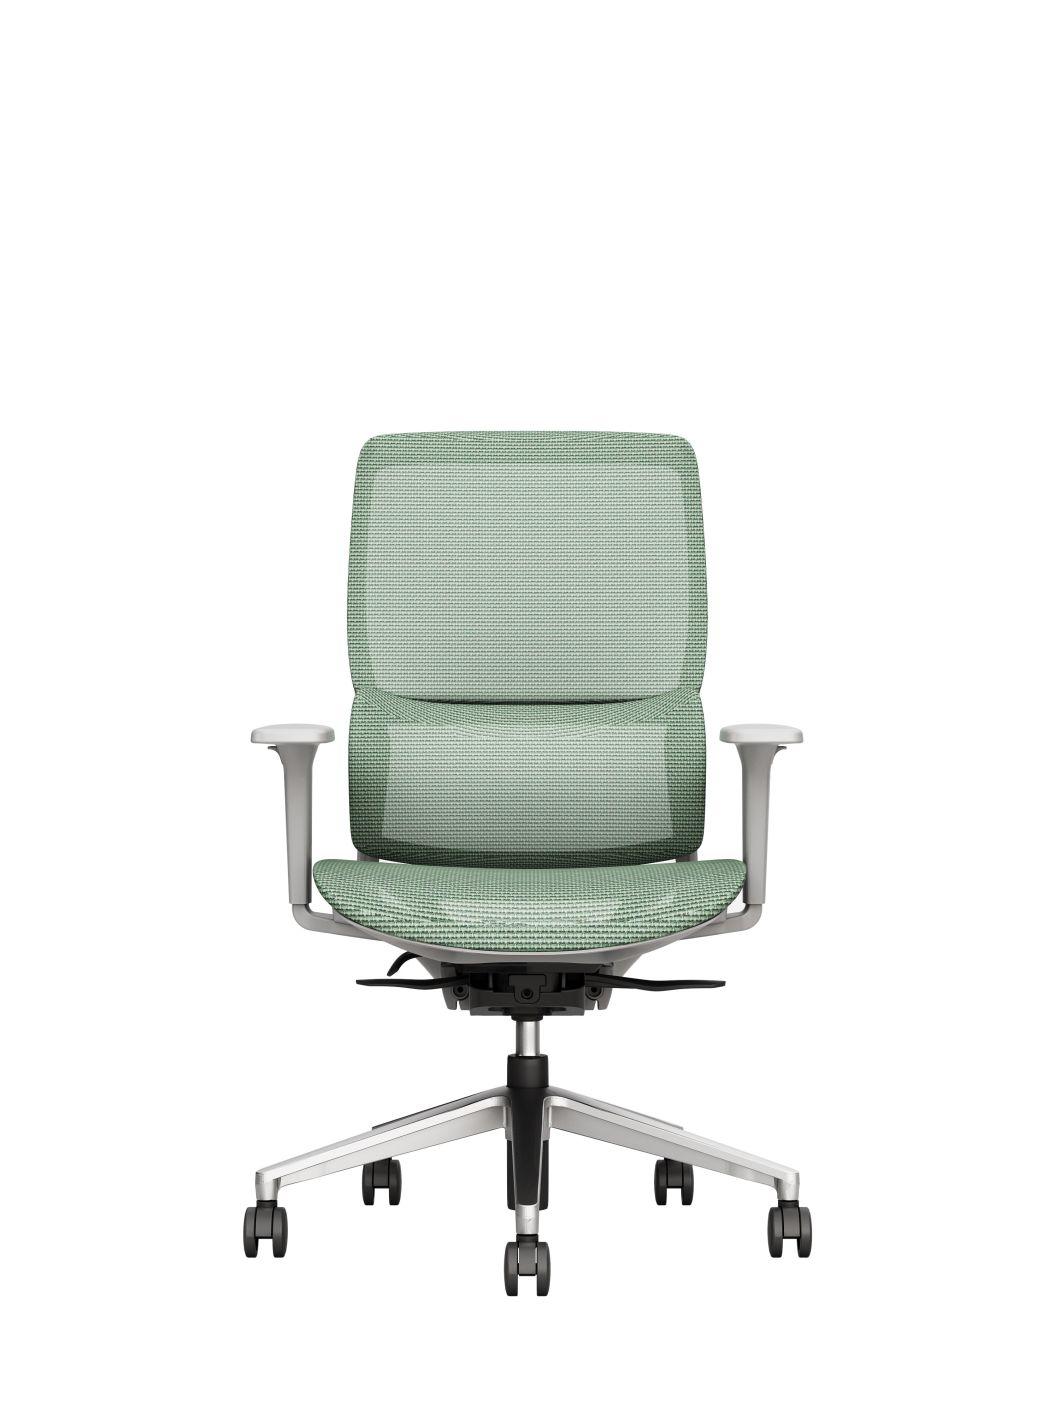 Swing Back New Design Ergonomic Chair Office Use